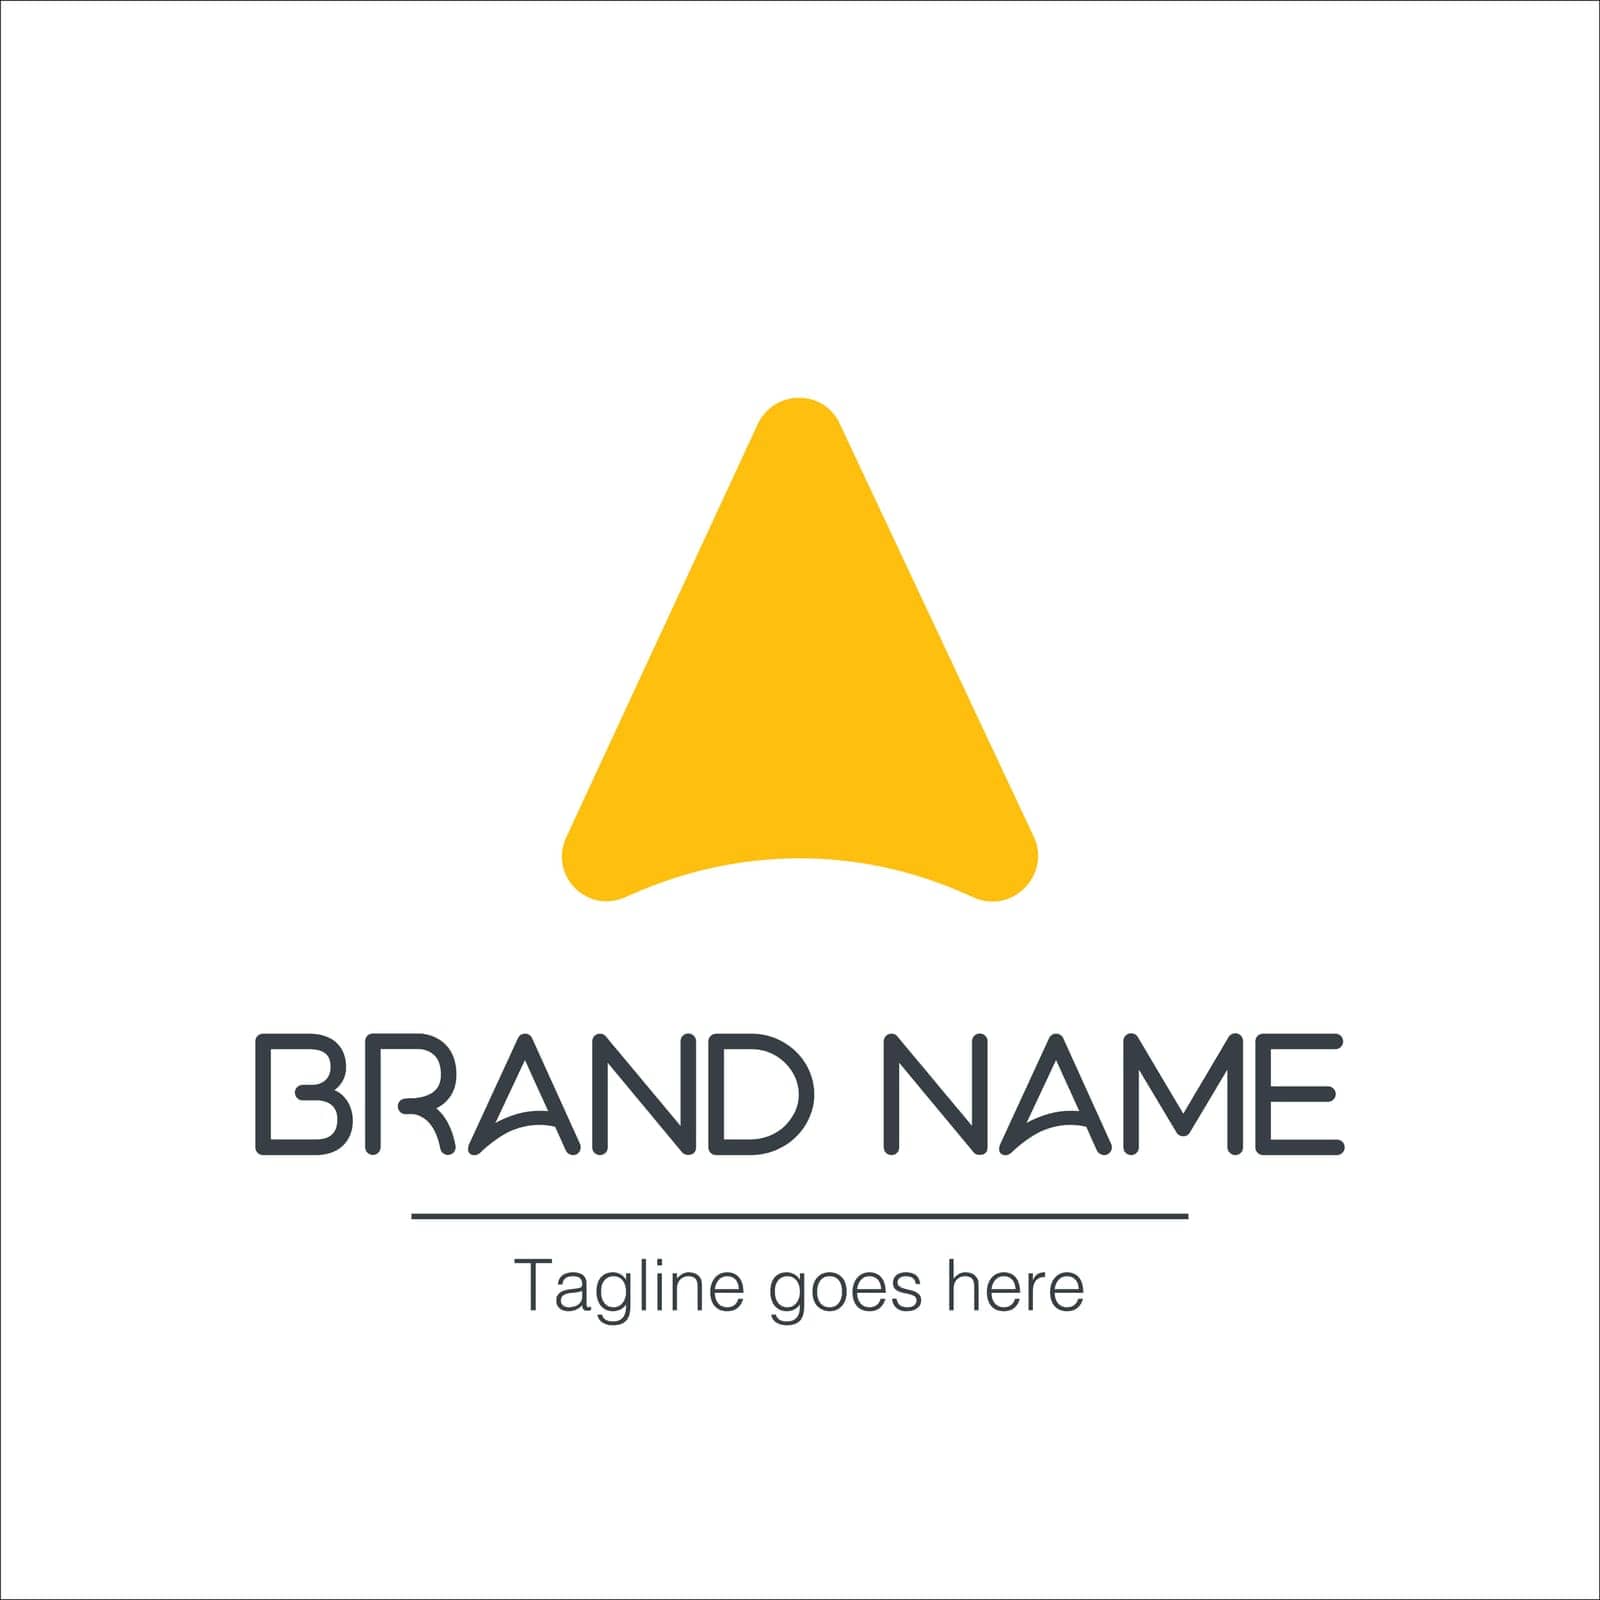 Letter A logo creative icon design template. branding identity. Stock vector illustration isolated